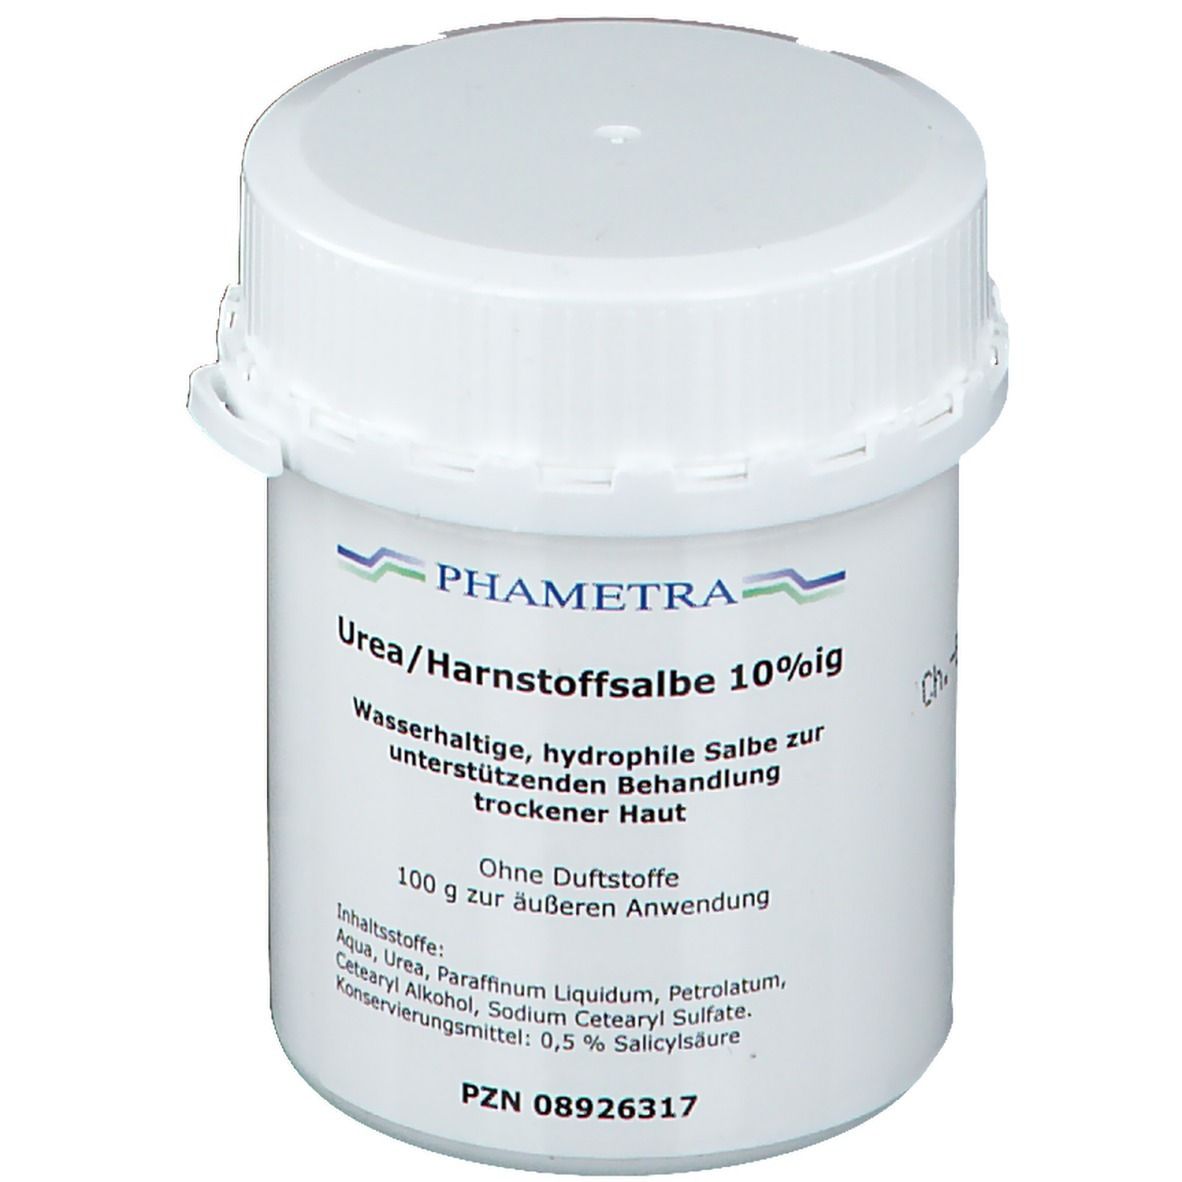 10% Urea Harnstoffsalbe – Phametra